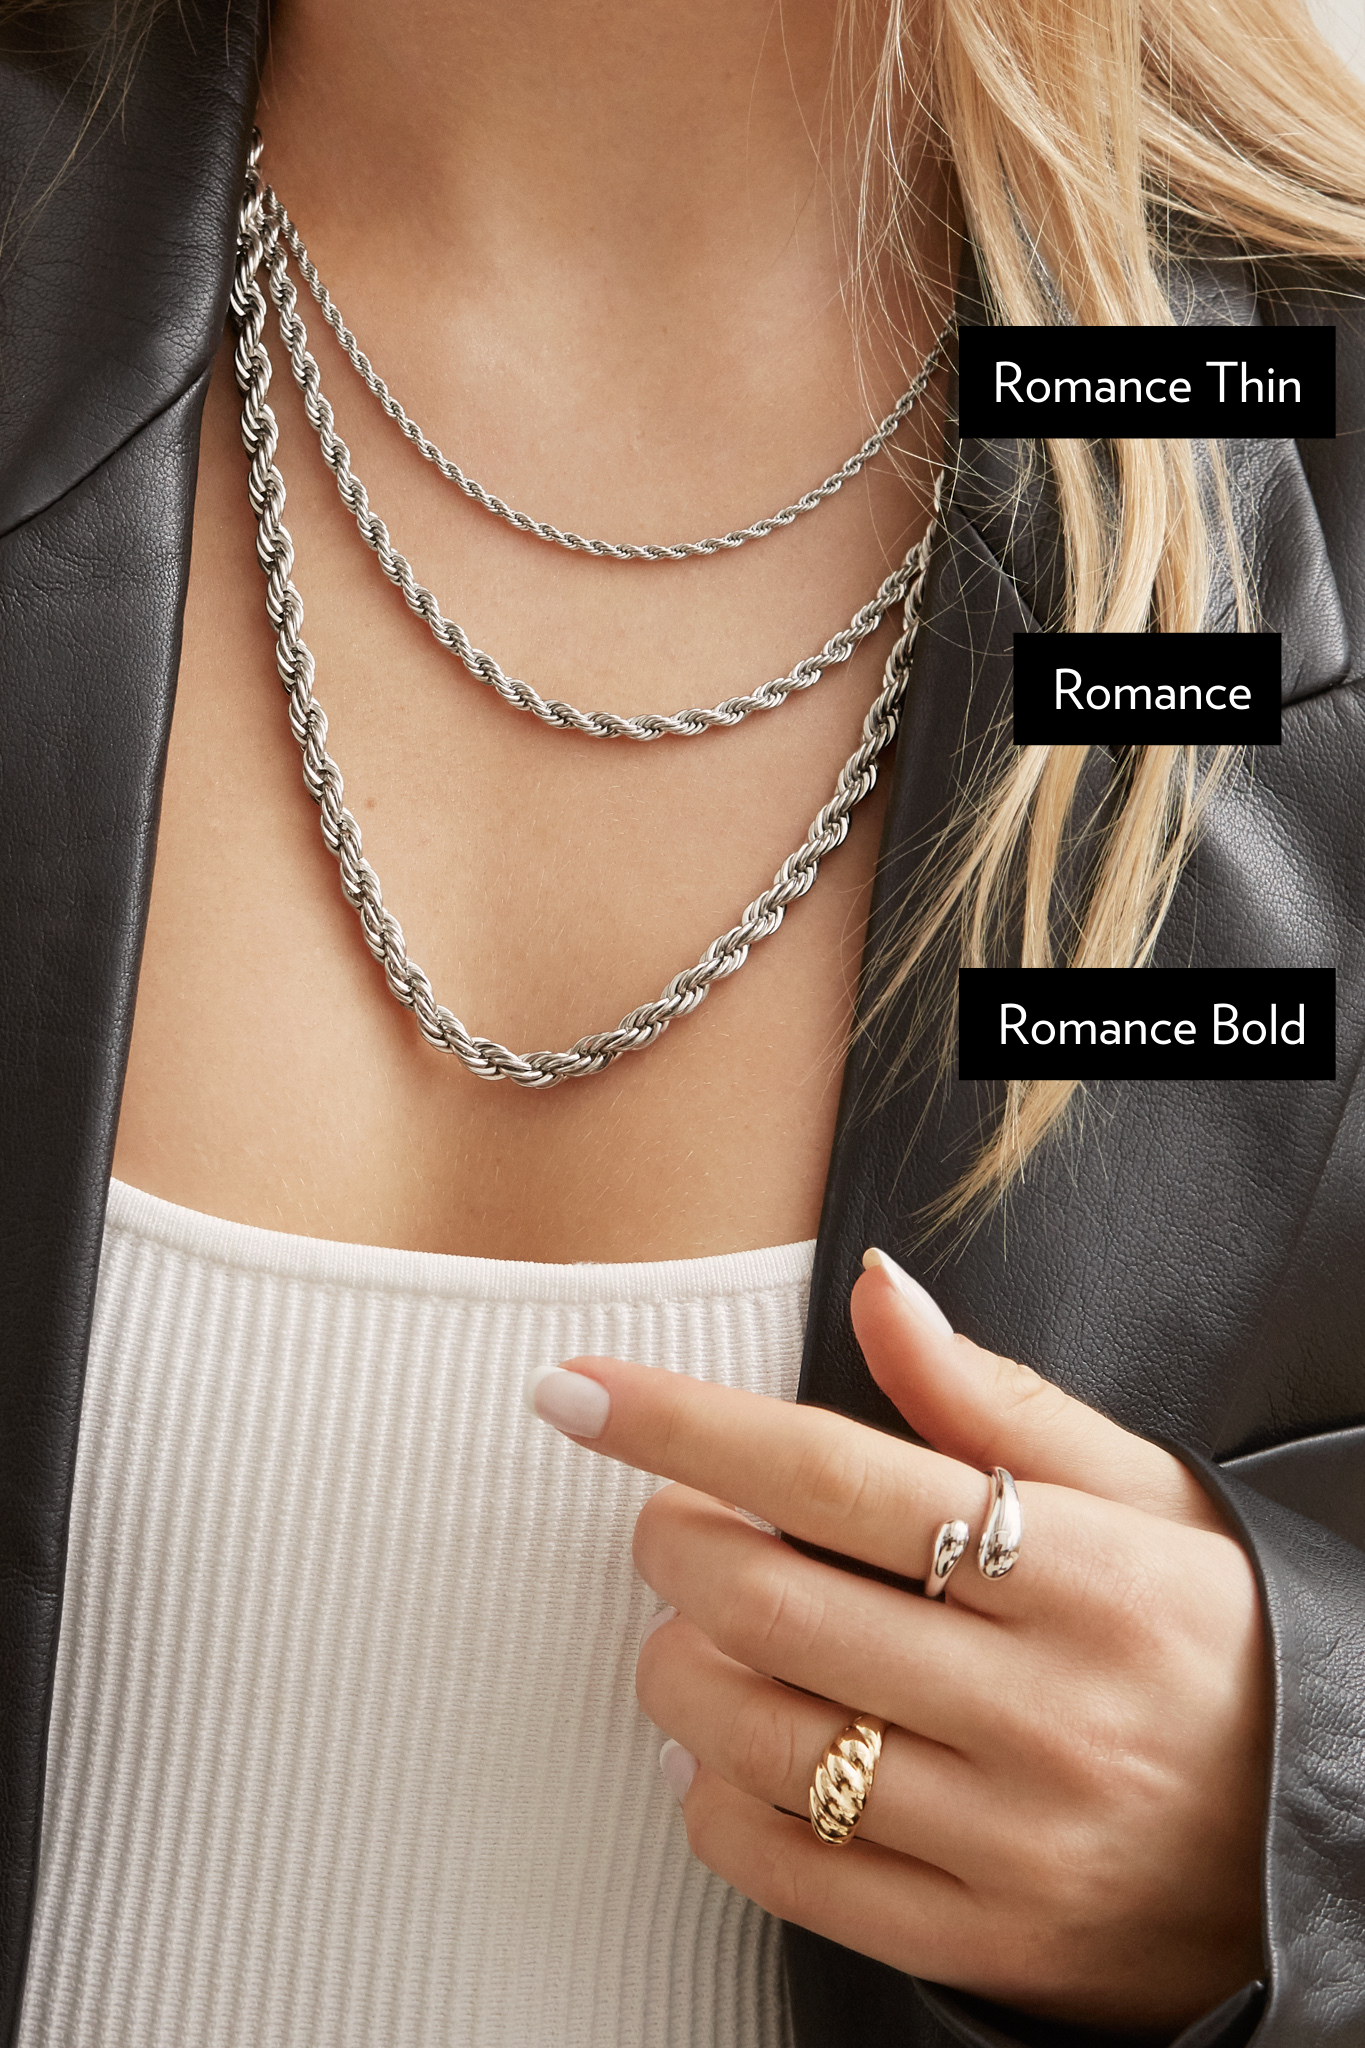 Romance Necklace - Silver